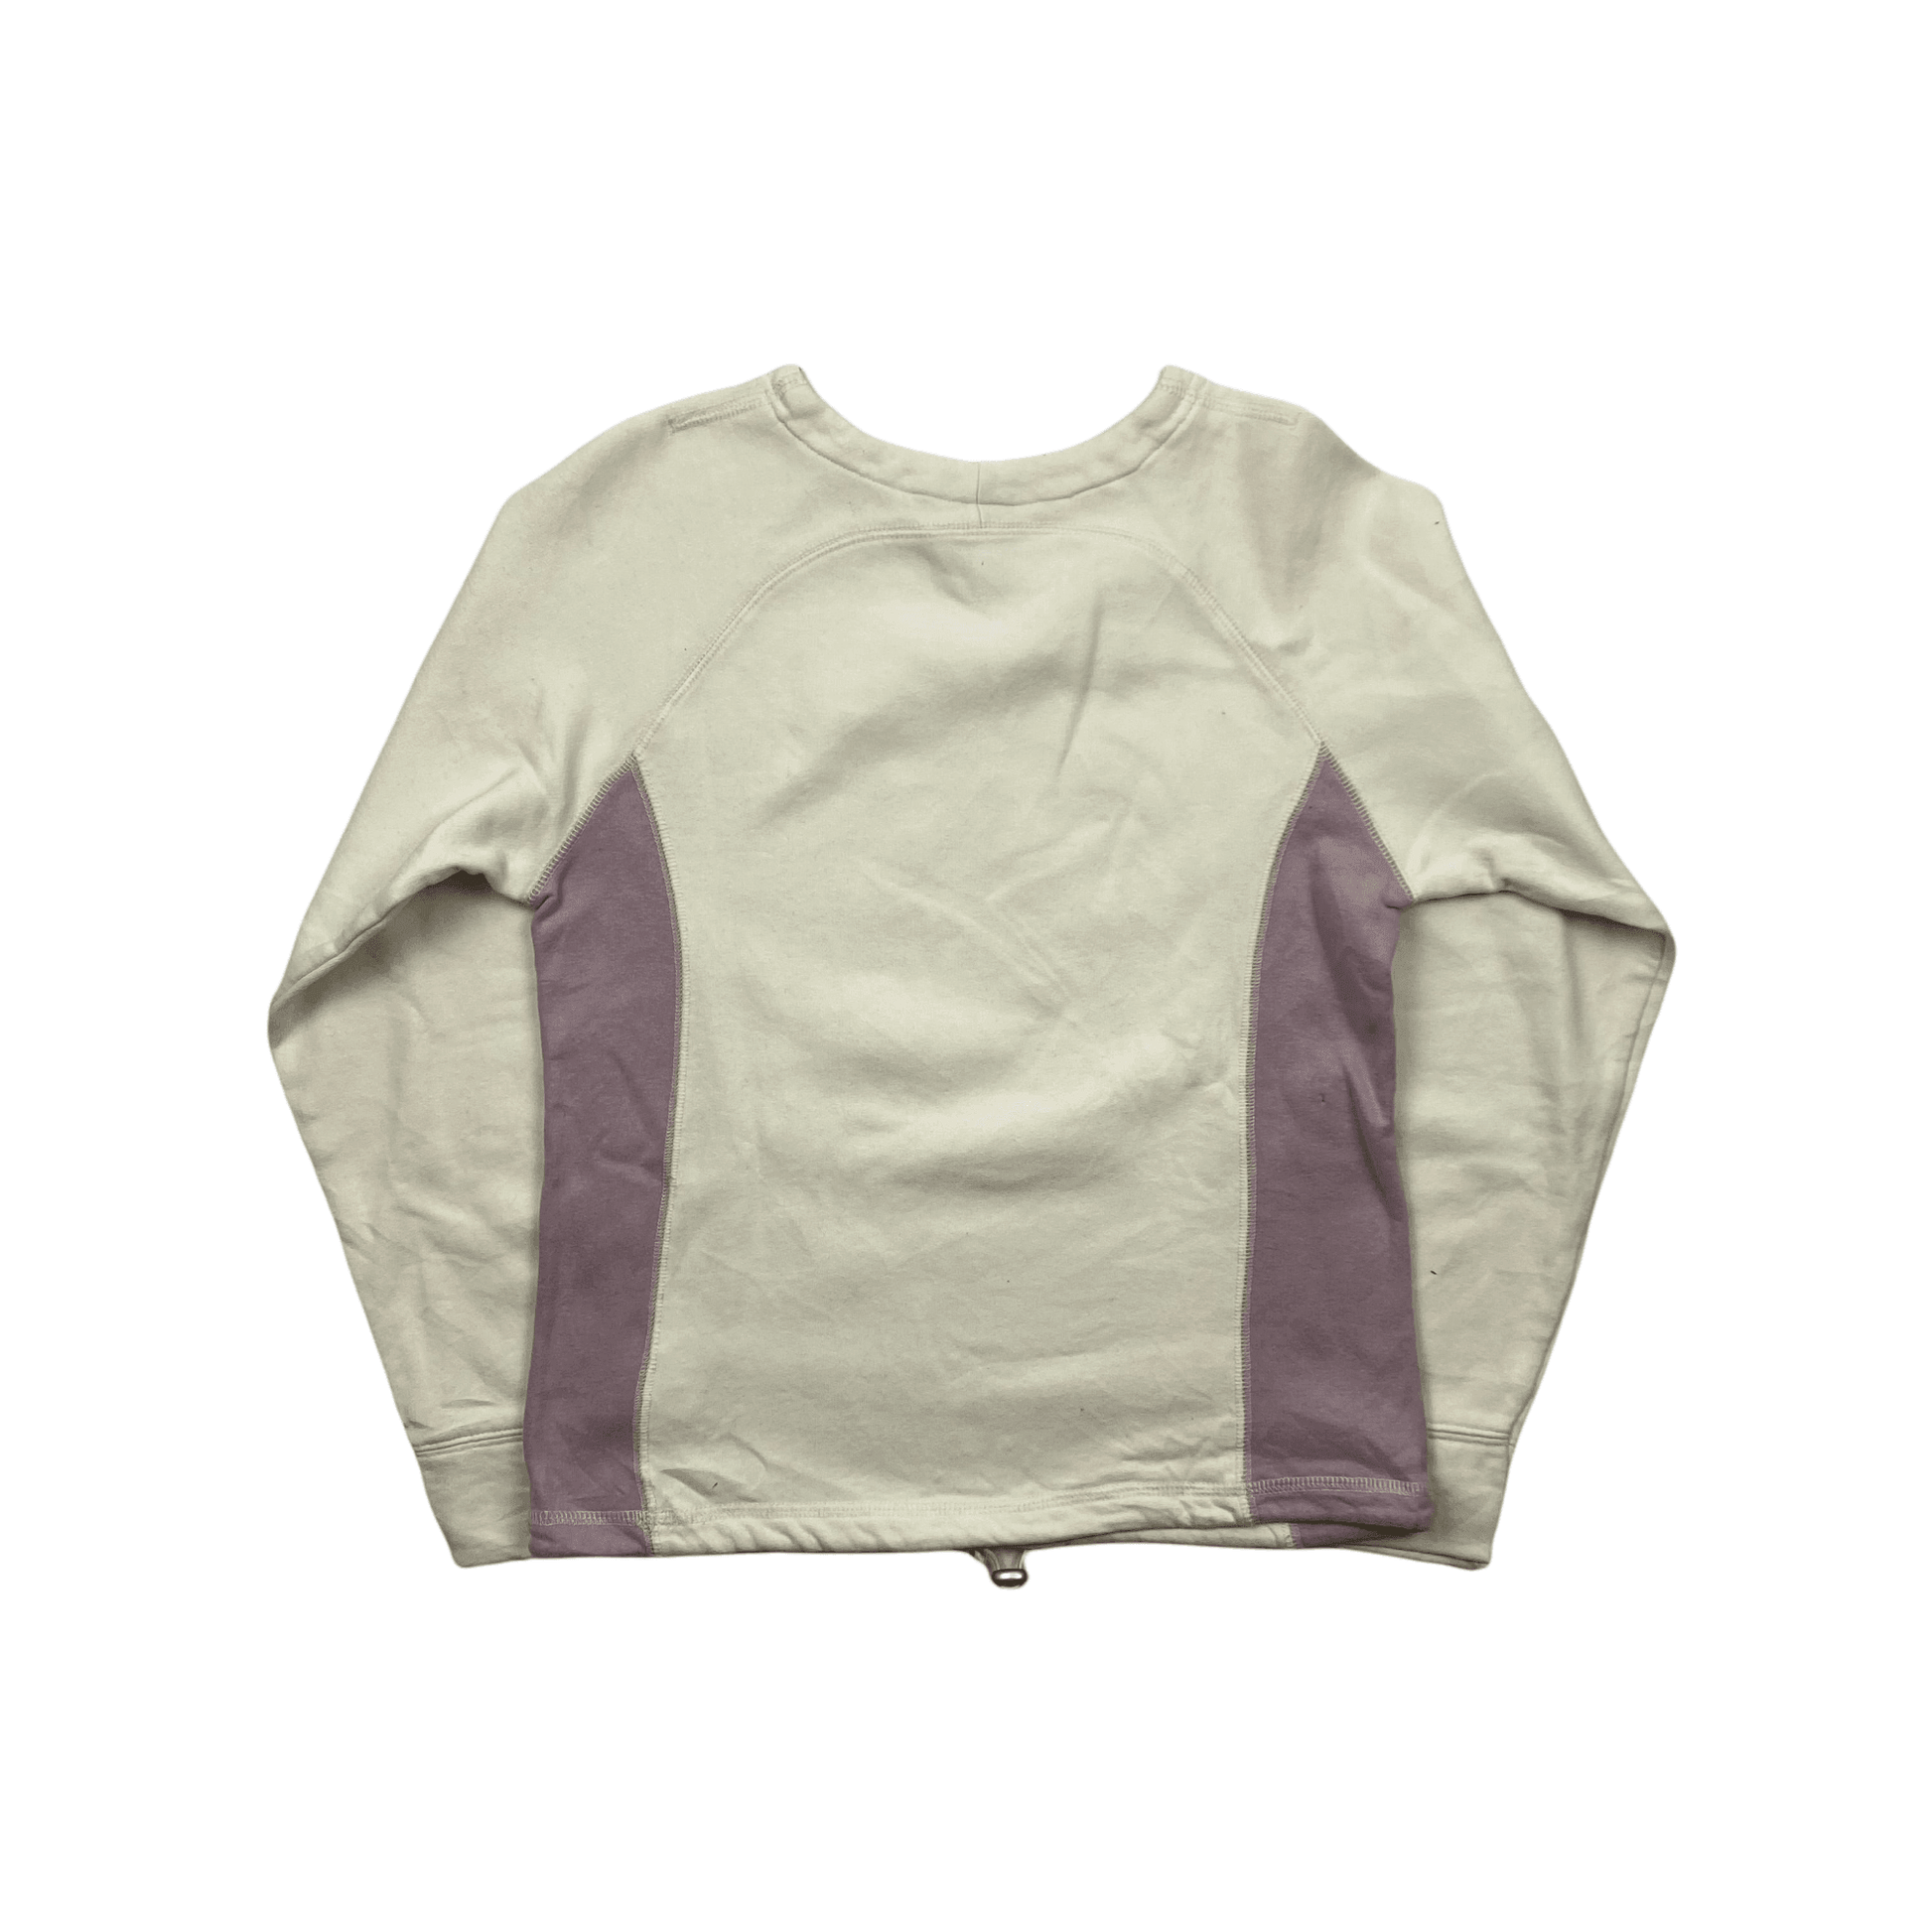 Vintage Women's Pink + White Nike Sweatshirt - Small - The Streetwear Studio